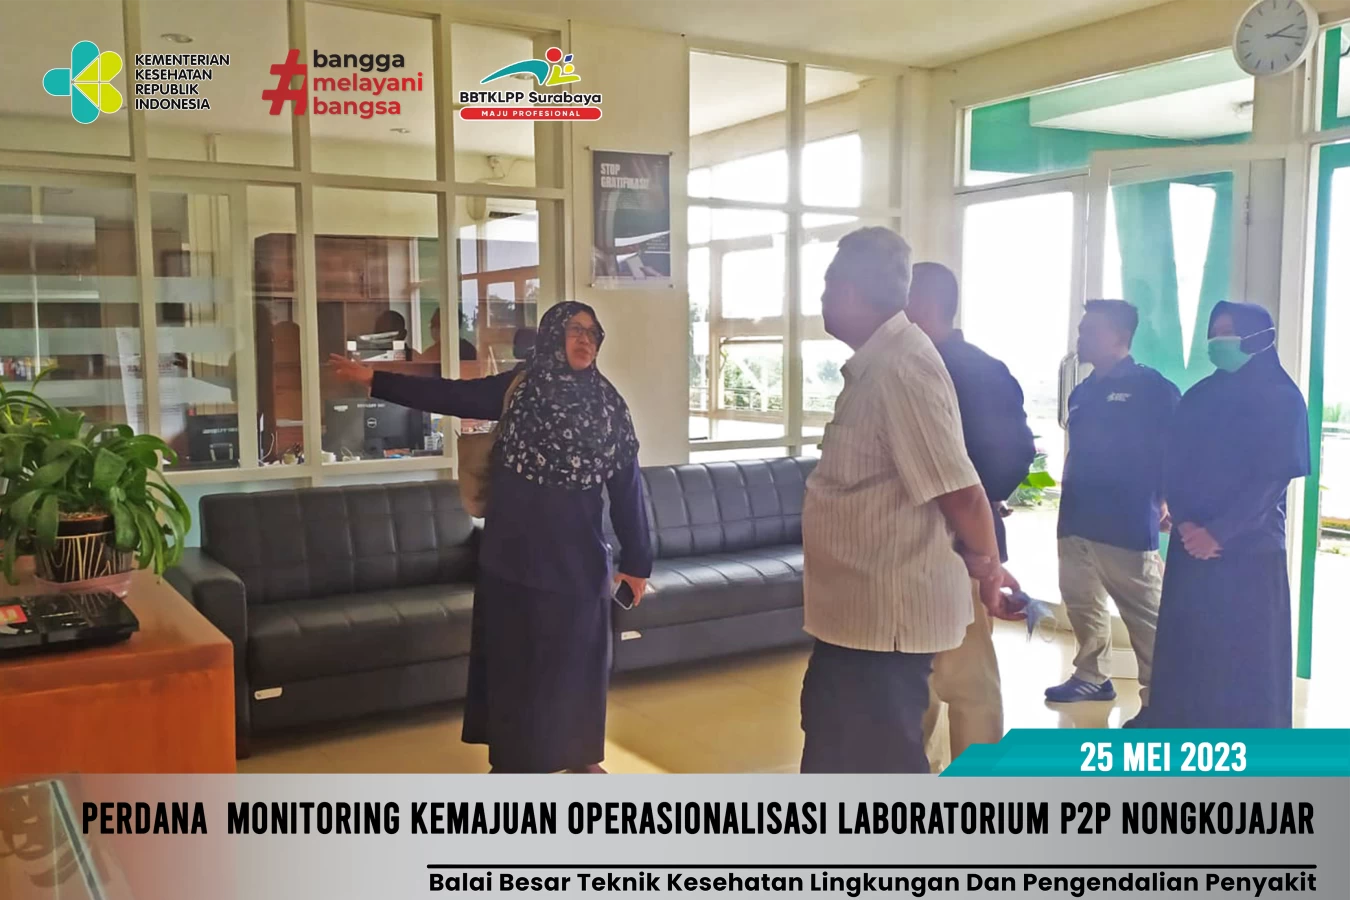 Monitoring Kemajuan Operasionalisasi Laboratorium P2P Nongkojajar Pasuruan BBTKLPP Surabaya